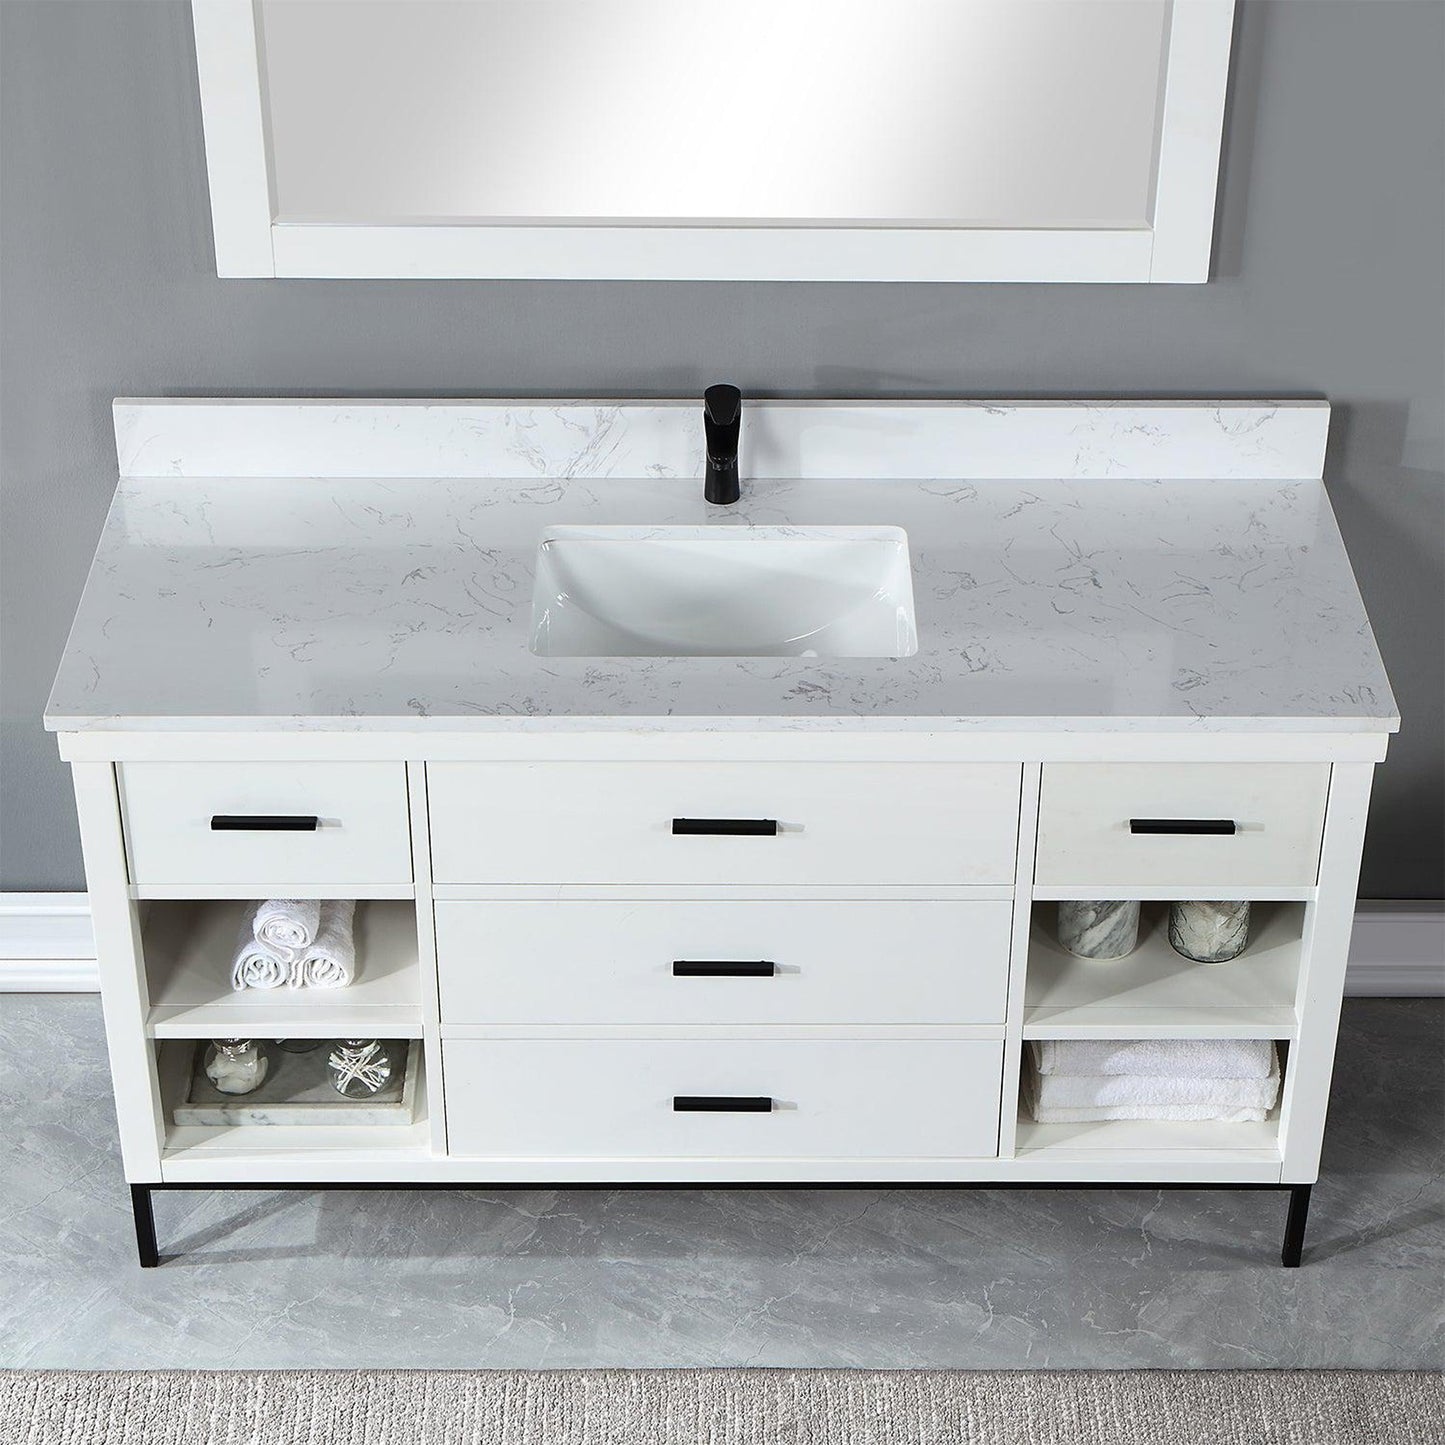 Altair Kesia 60" White Freestanding Single Bathroom Vanity Set With Mirror, Stylish Aosta White Composite Stone Top, Rectangular Undermount Ceramic Sink, Overflow, and Backsplash